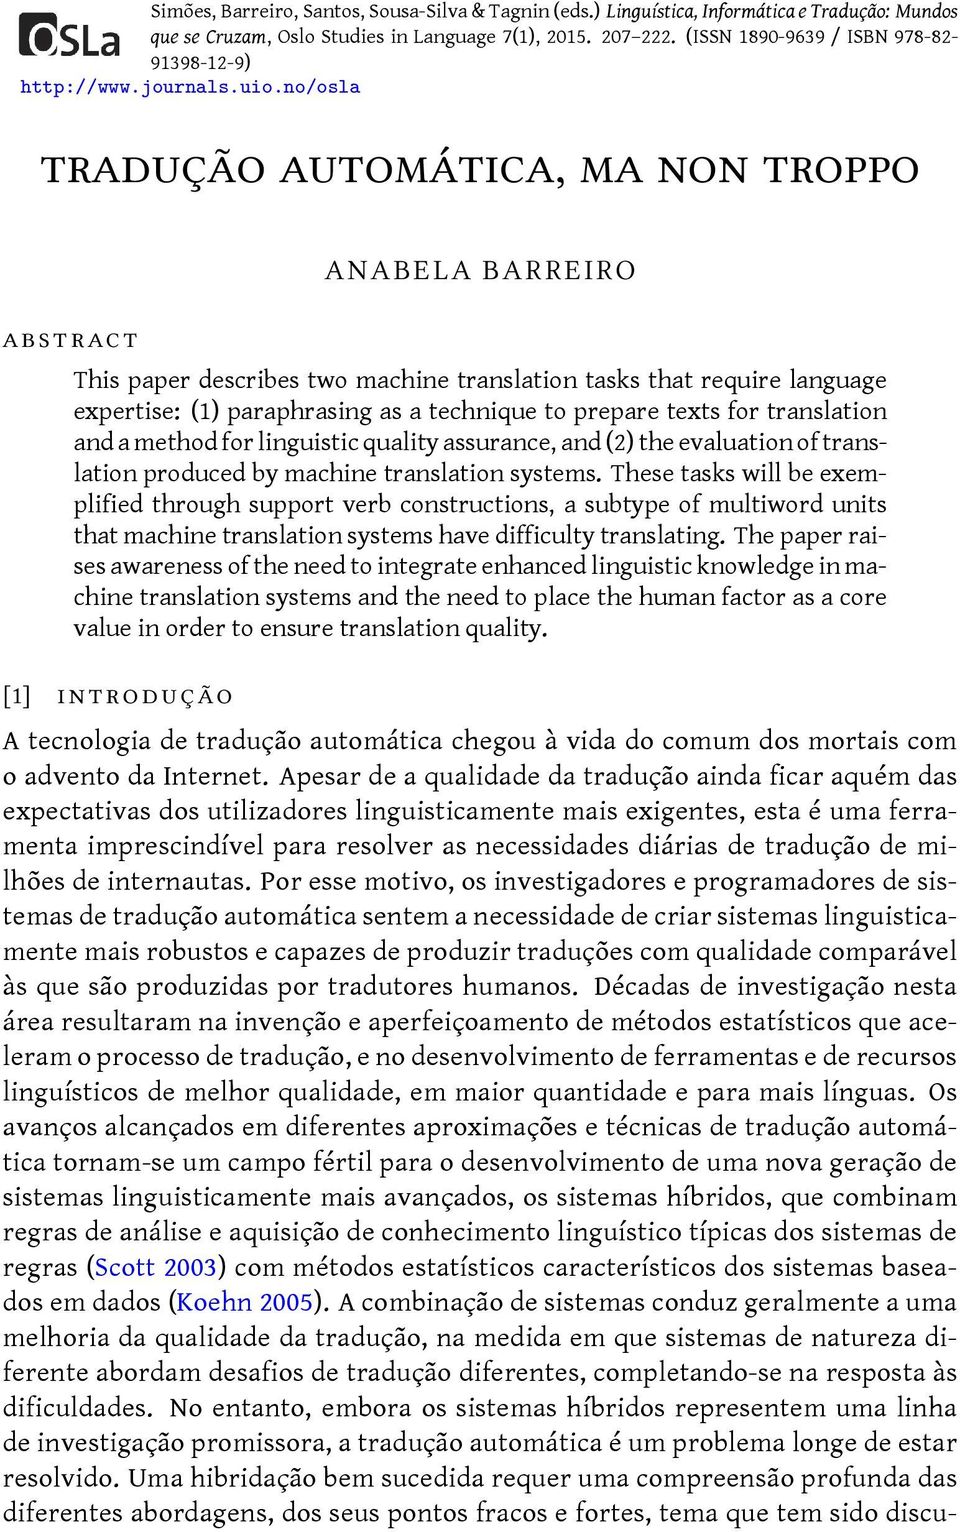 no/osla tradução automática, ma non troppo abstract ANABELA BARREIRO This paper describes two machine translation tasks that require language expertise: (1) paraphrasing as a technique to prepare